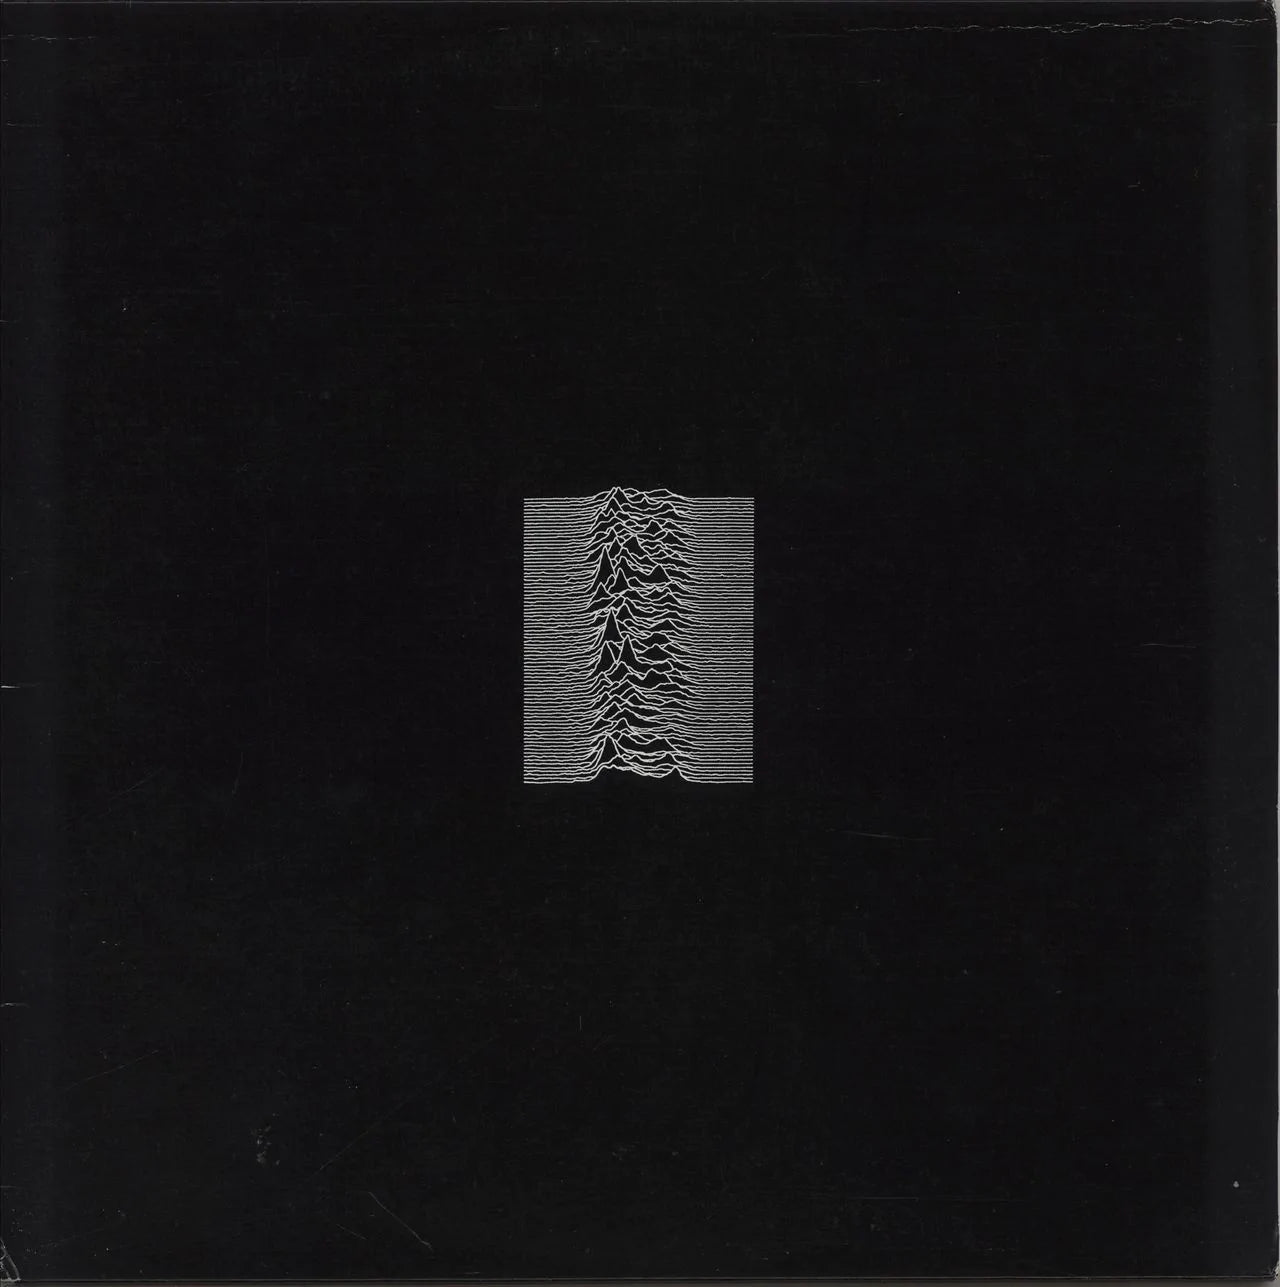 Joy Division - Unknown Pleasures LP (180g, Remastered, Textured Sleeve